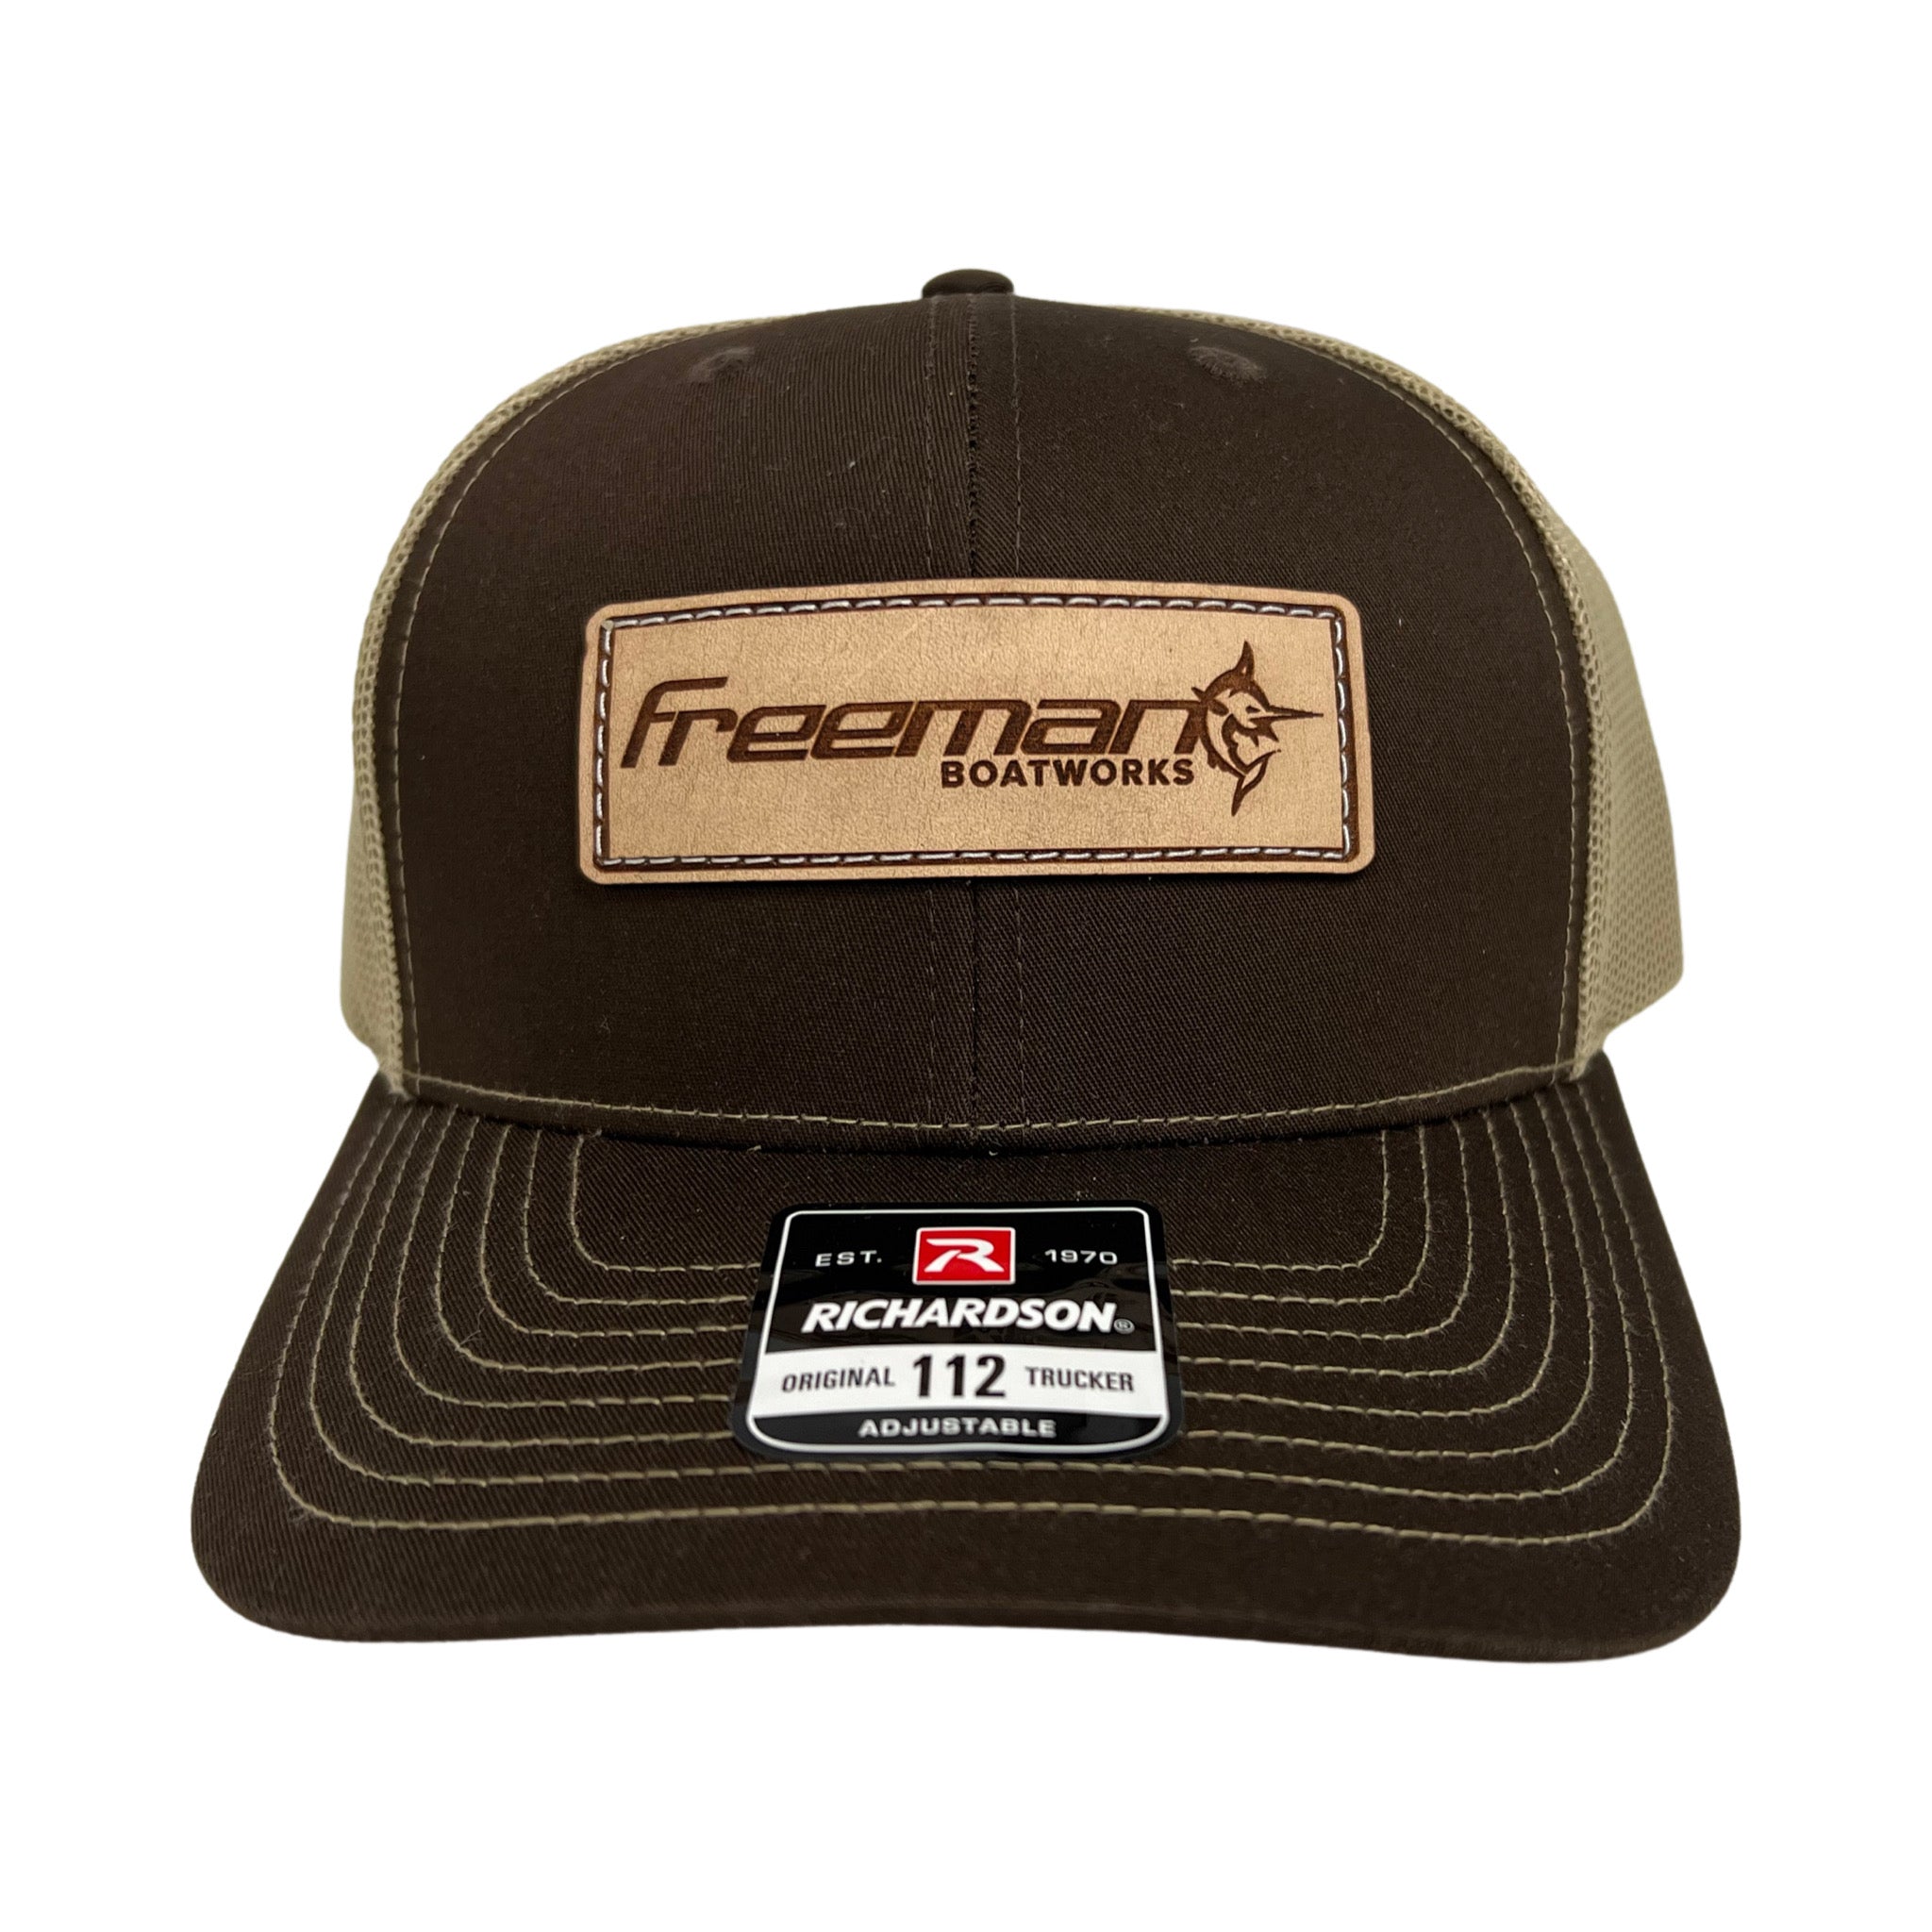 Freeman Boatworks Leather Patch Trucker - Driftwood Brown/Khaki